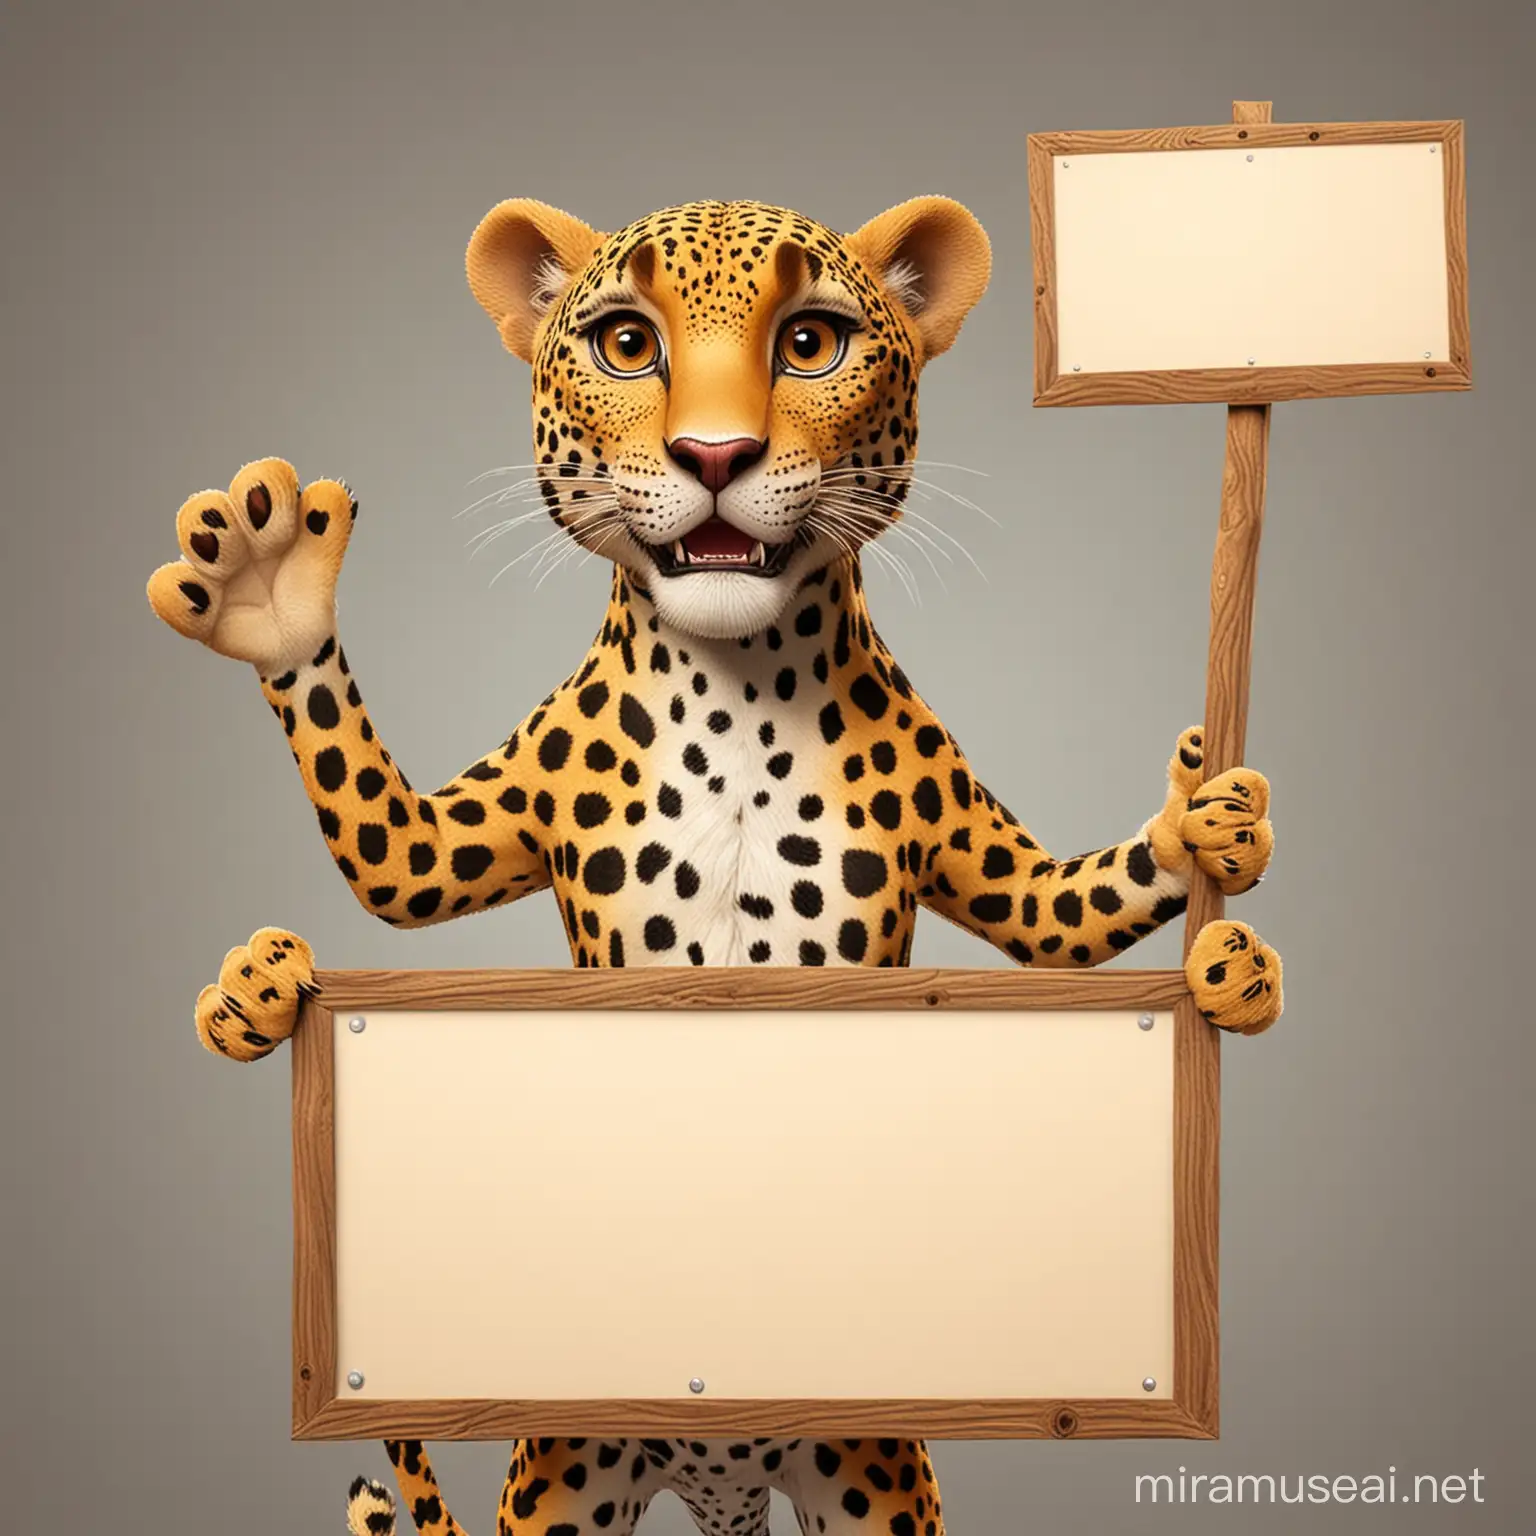 Cheerful Cartoon Adult Leopard Holding a Signboard